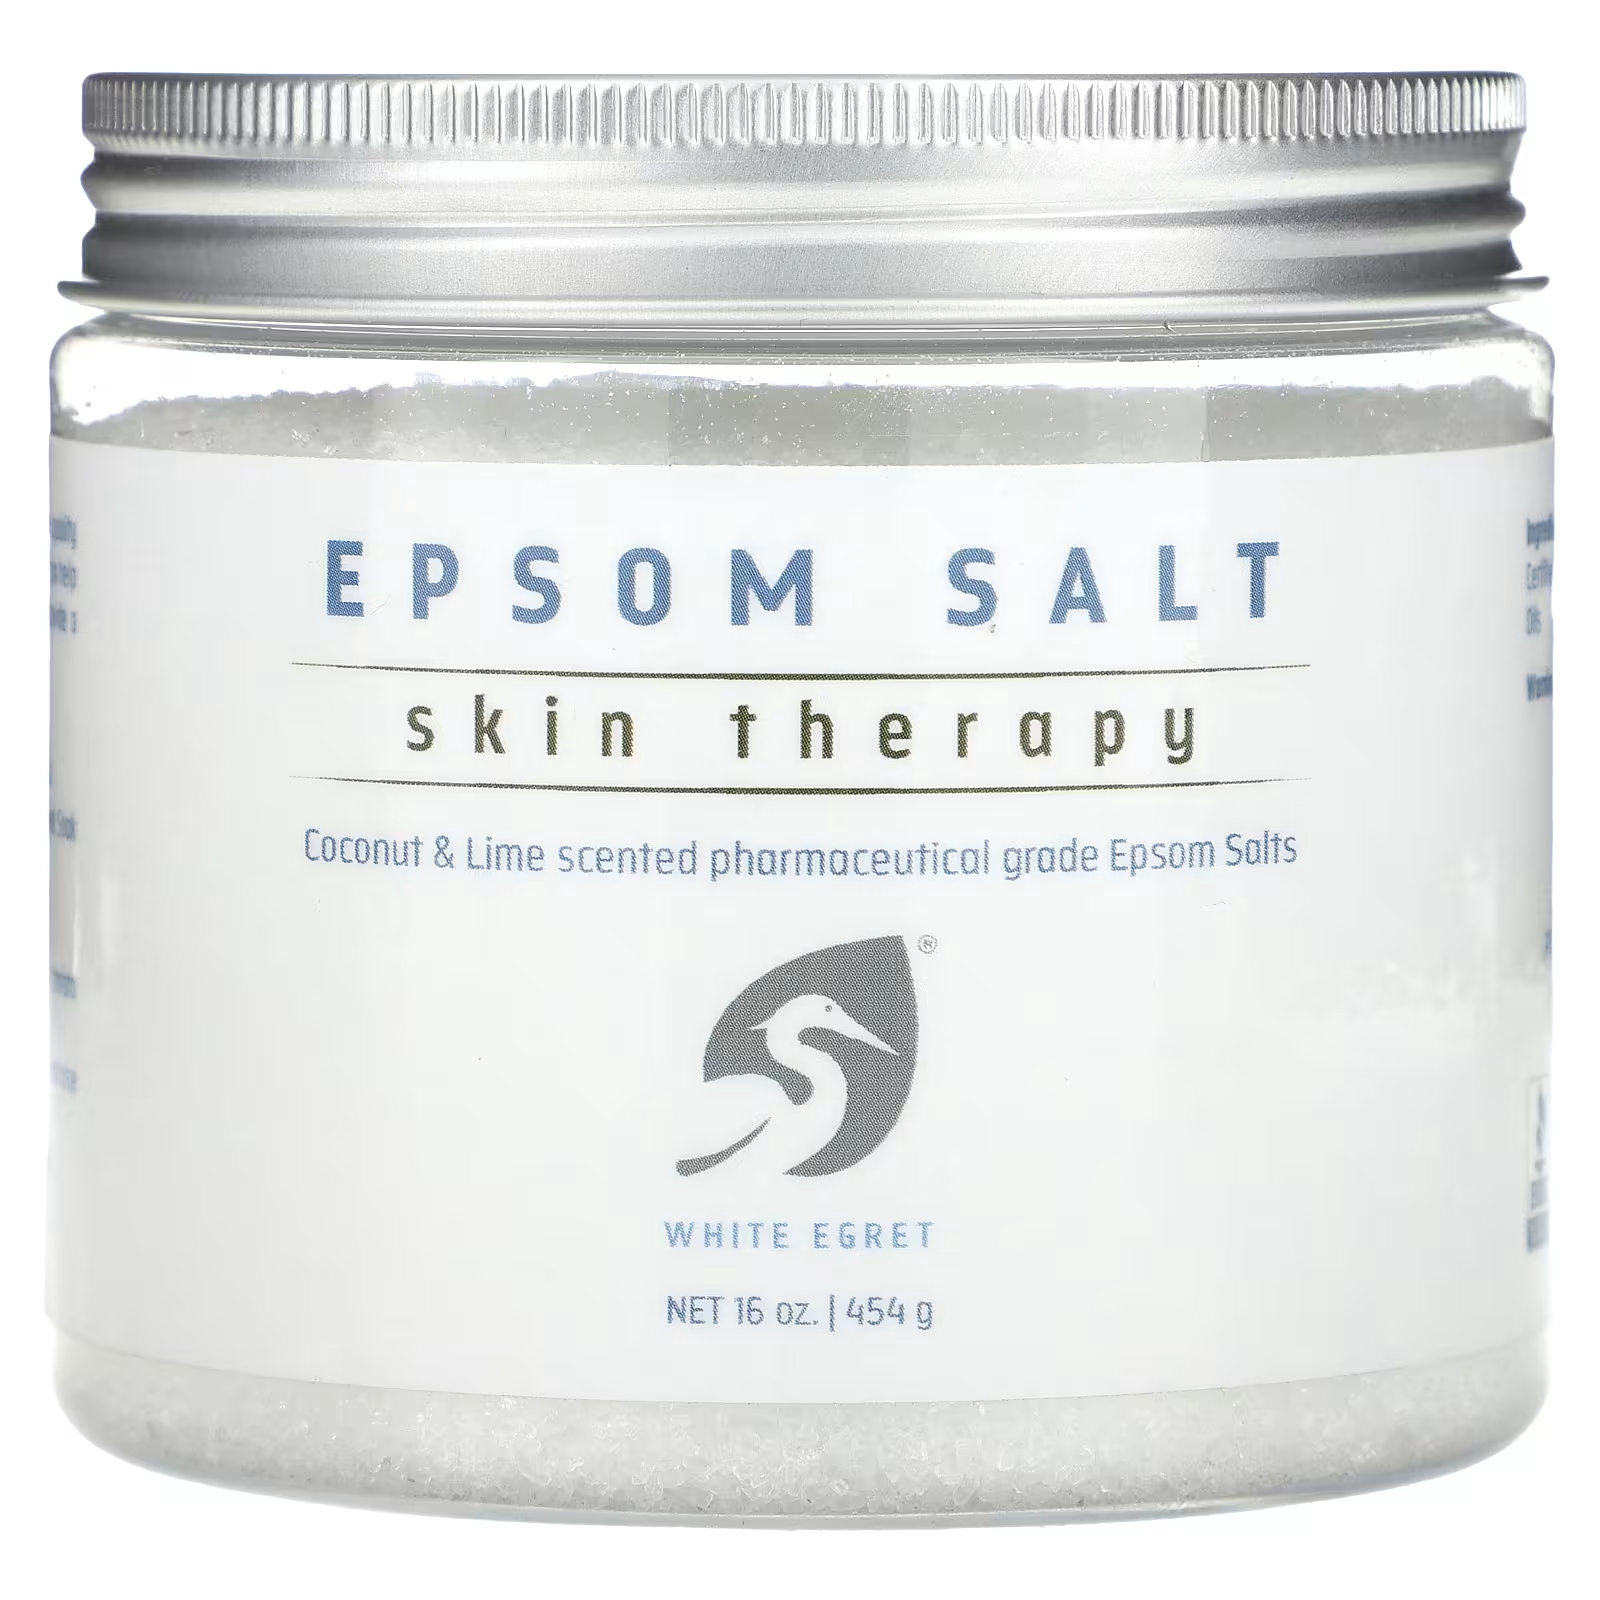 White Egret Personal Care Терапия для кожи с солью Эпсома, кокос и лайм, 16 унций (454 г)